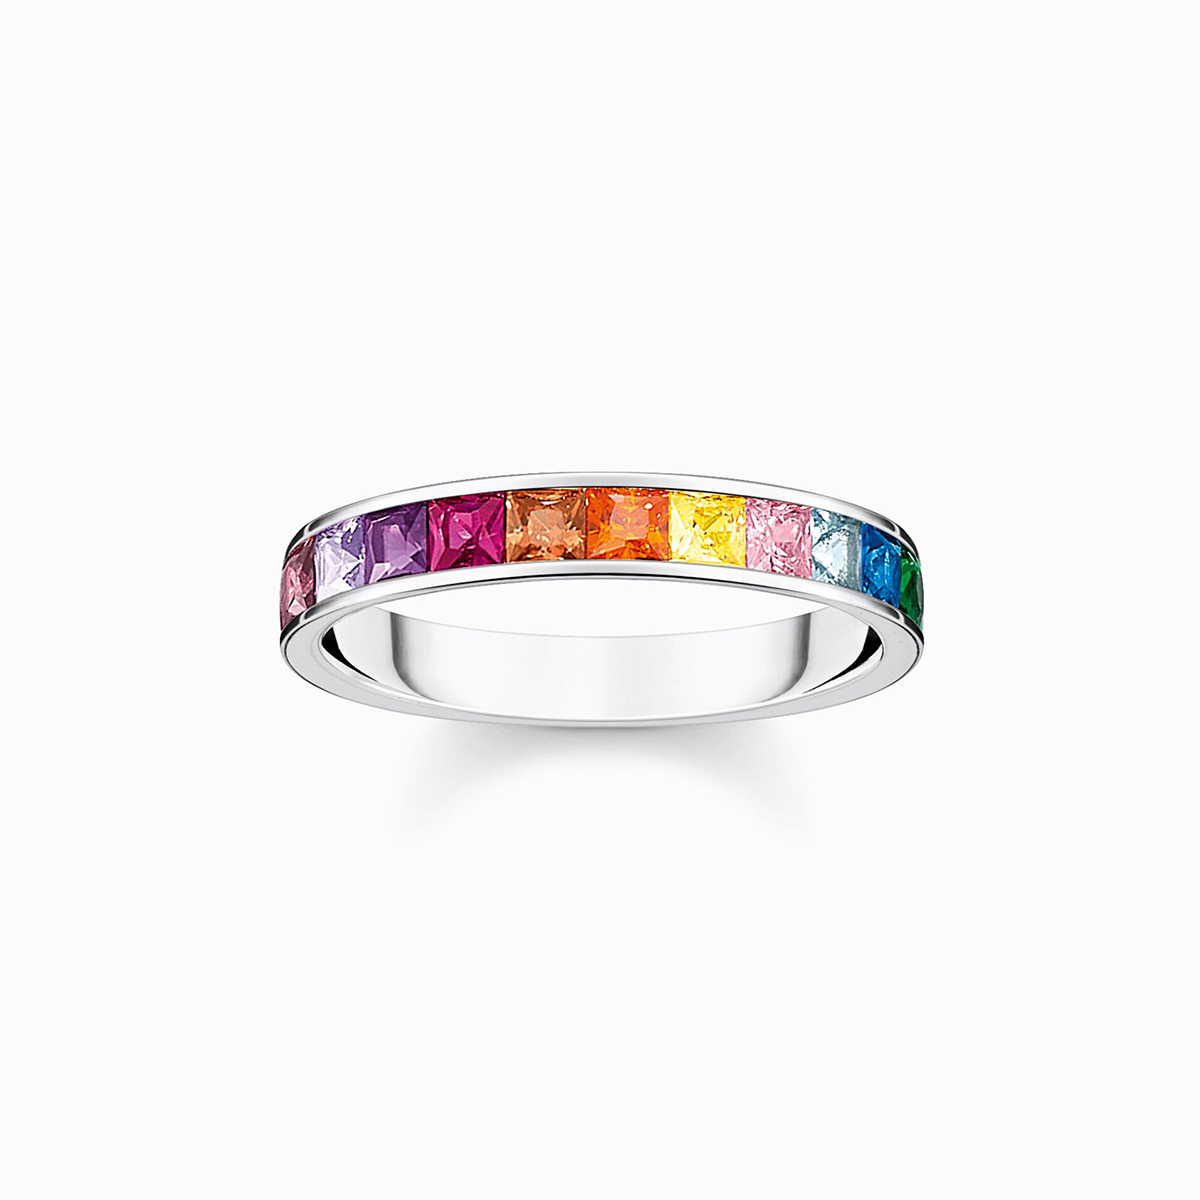 Thomas Sabo Rainbow Heritage prsten